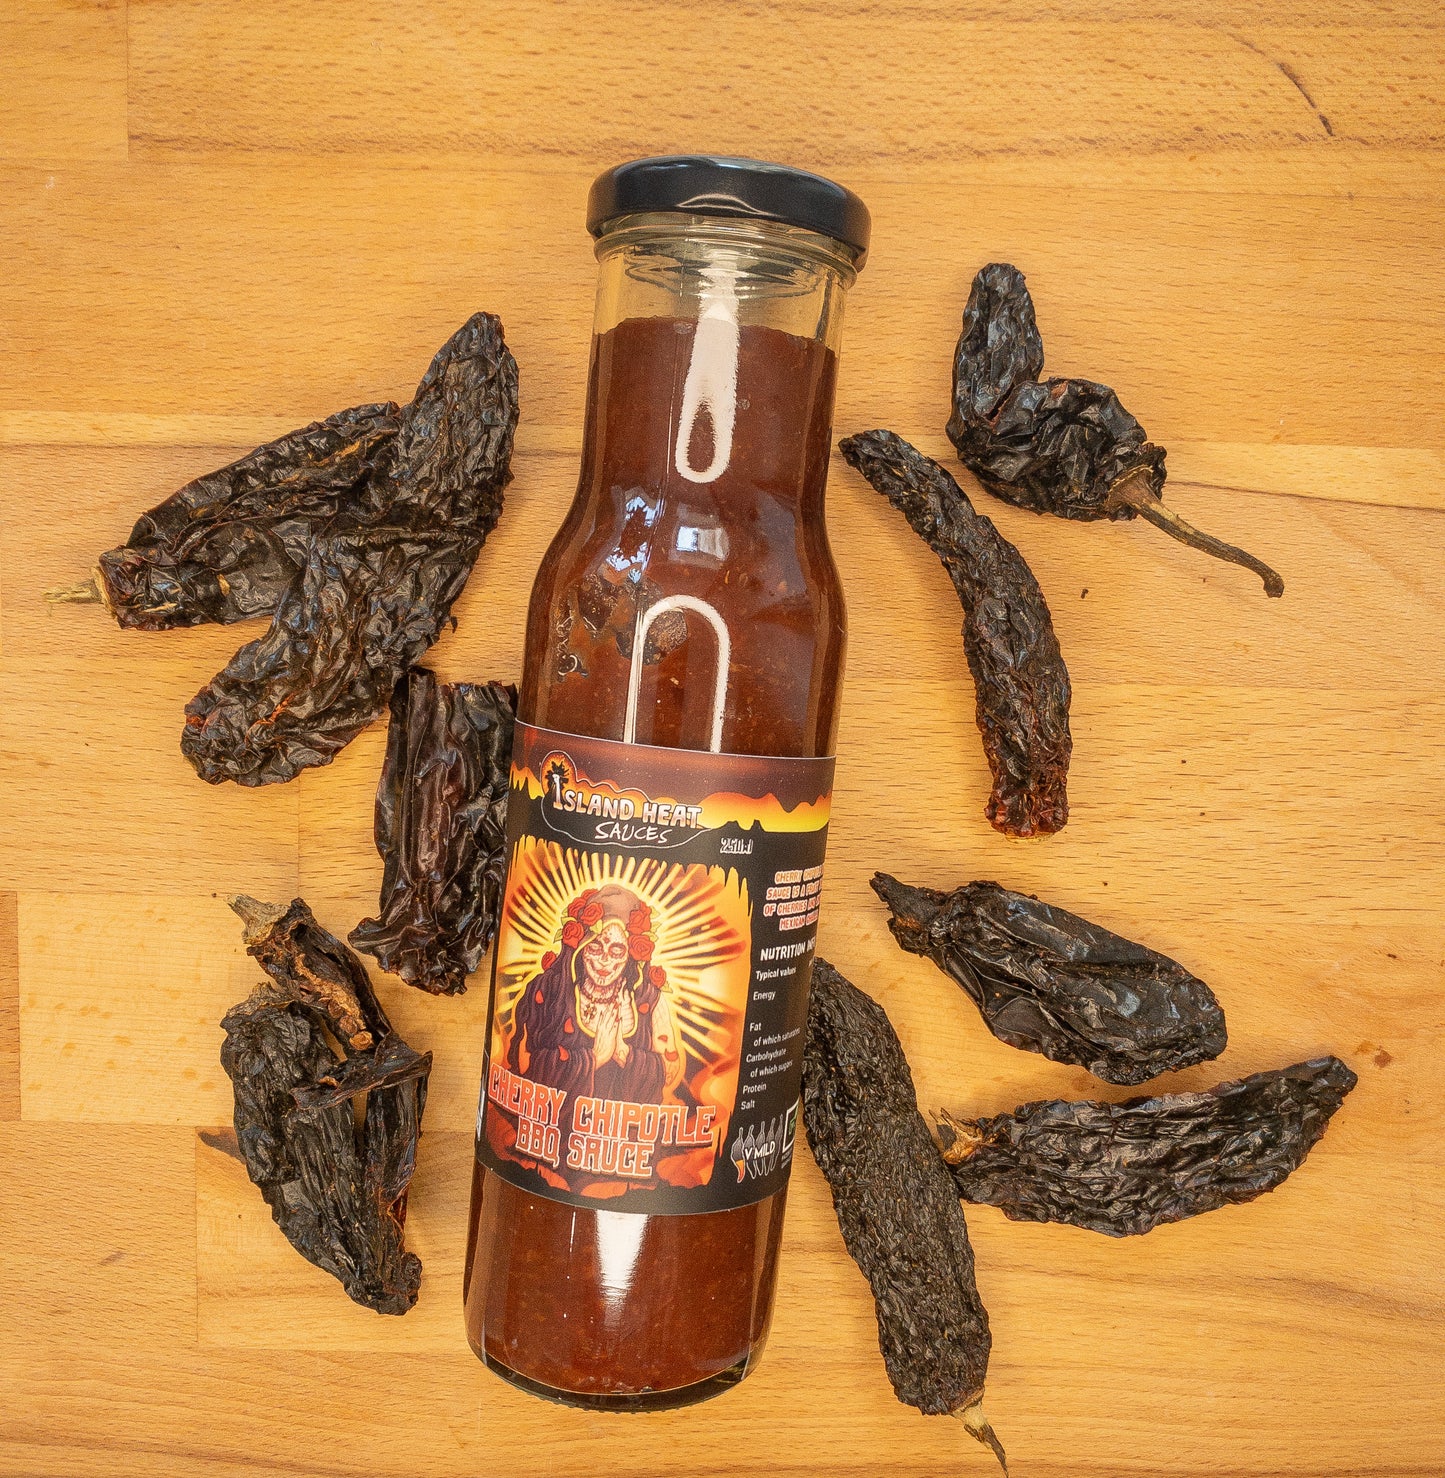 Cherry chipotle bbq sauce bottle